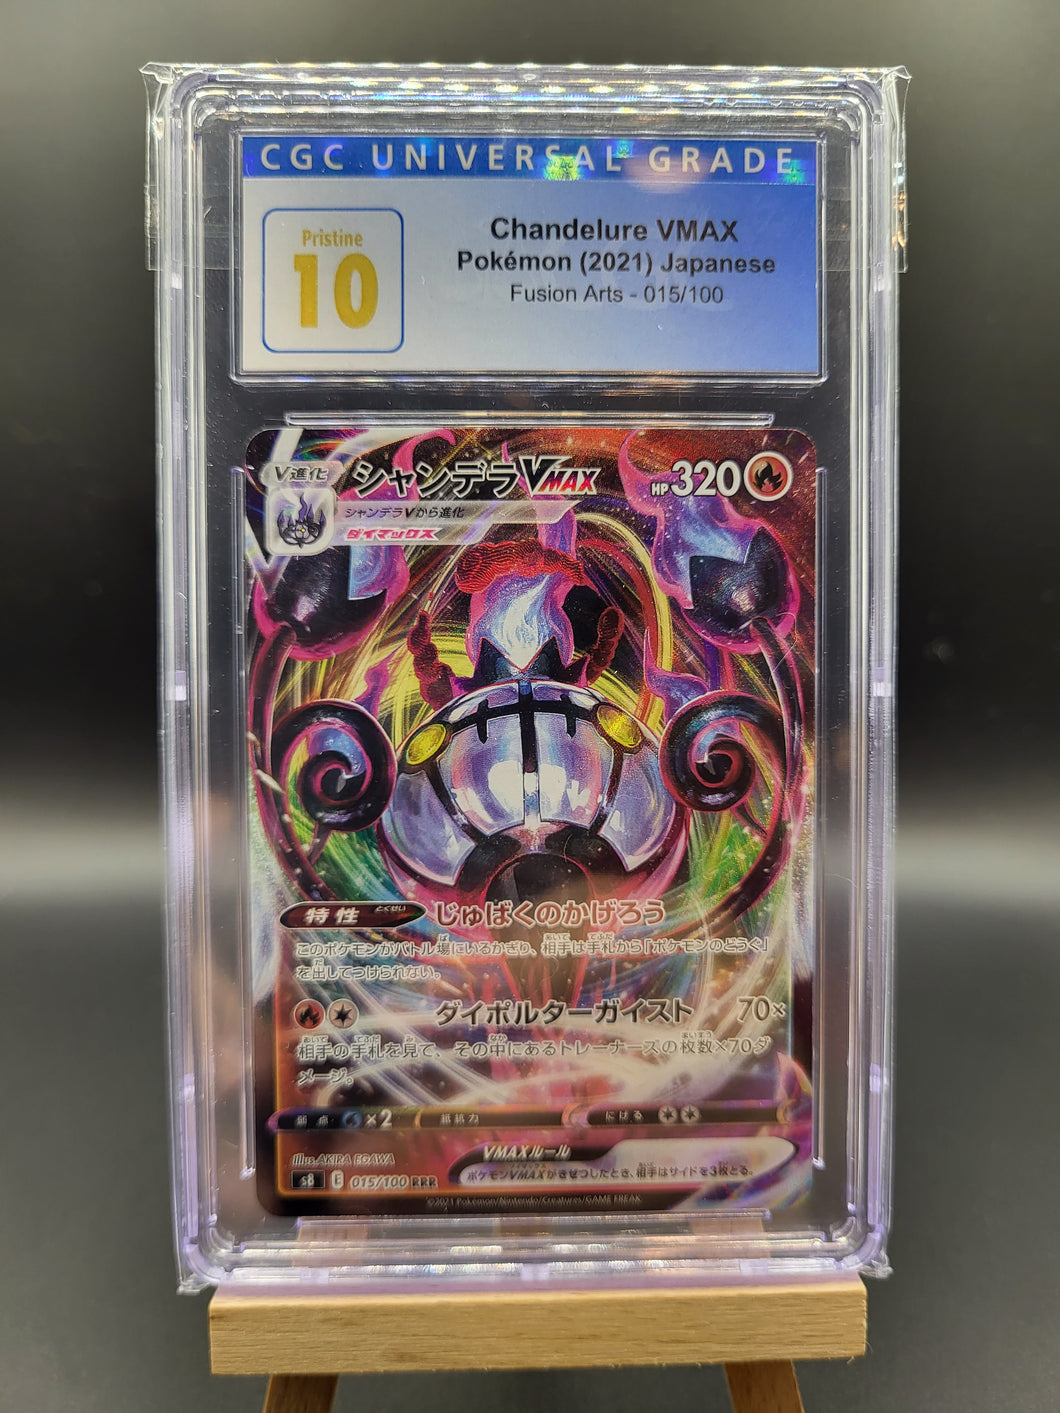 CGC PRISTINE 10 Chandelure VMAX - Fusion Arts 015/100 Japanese